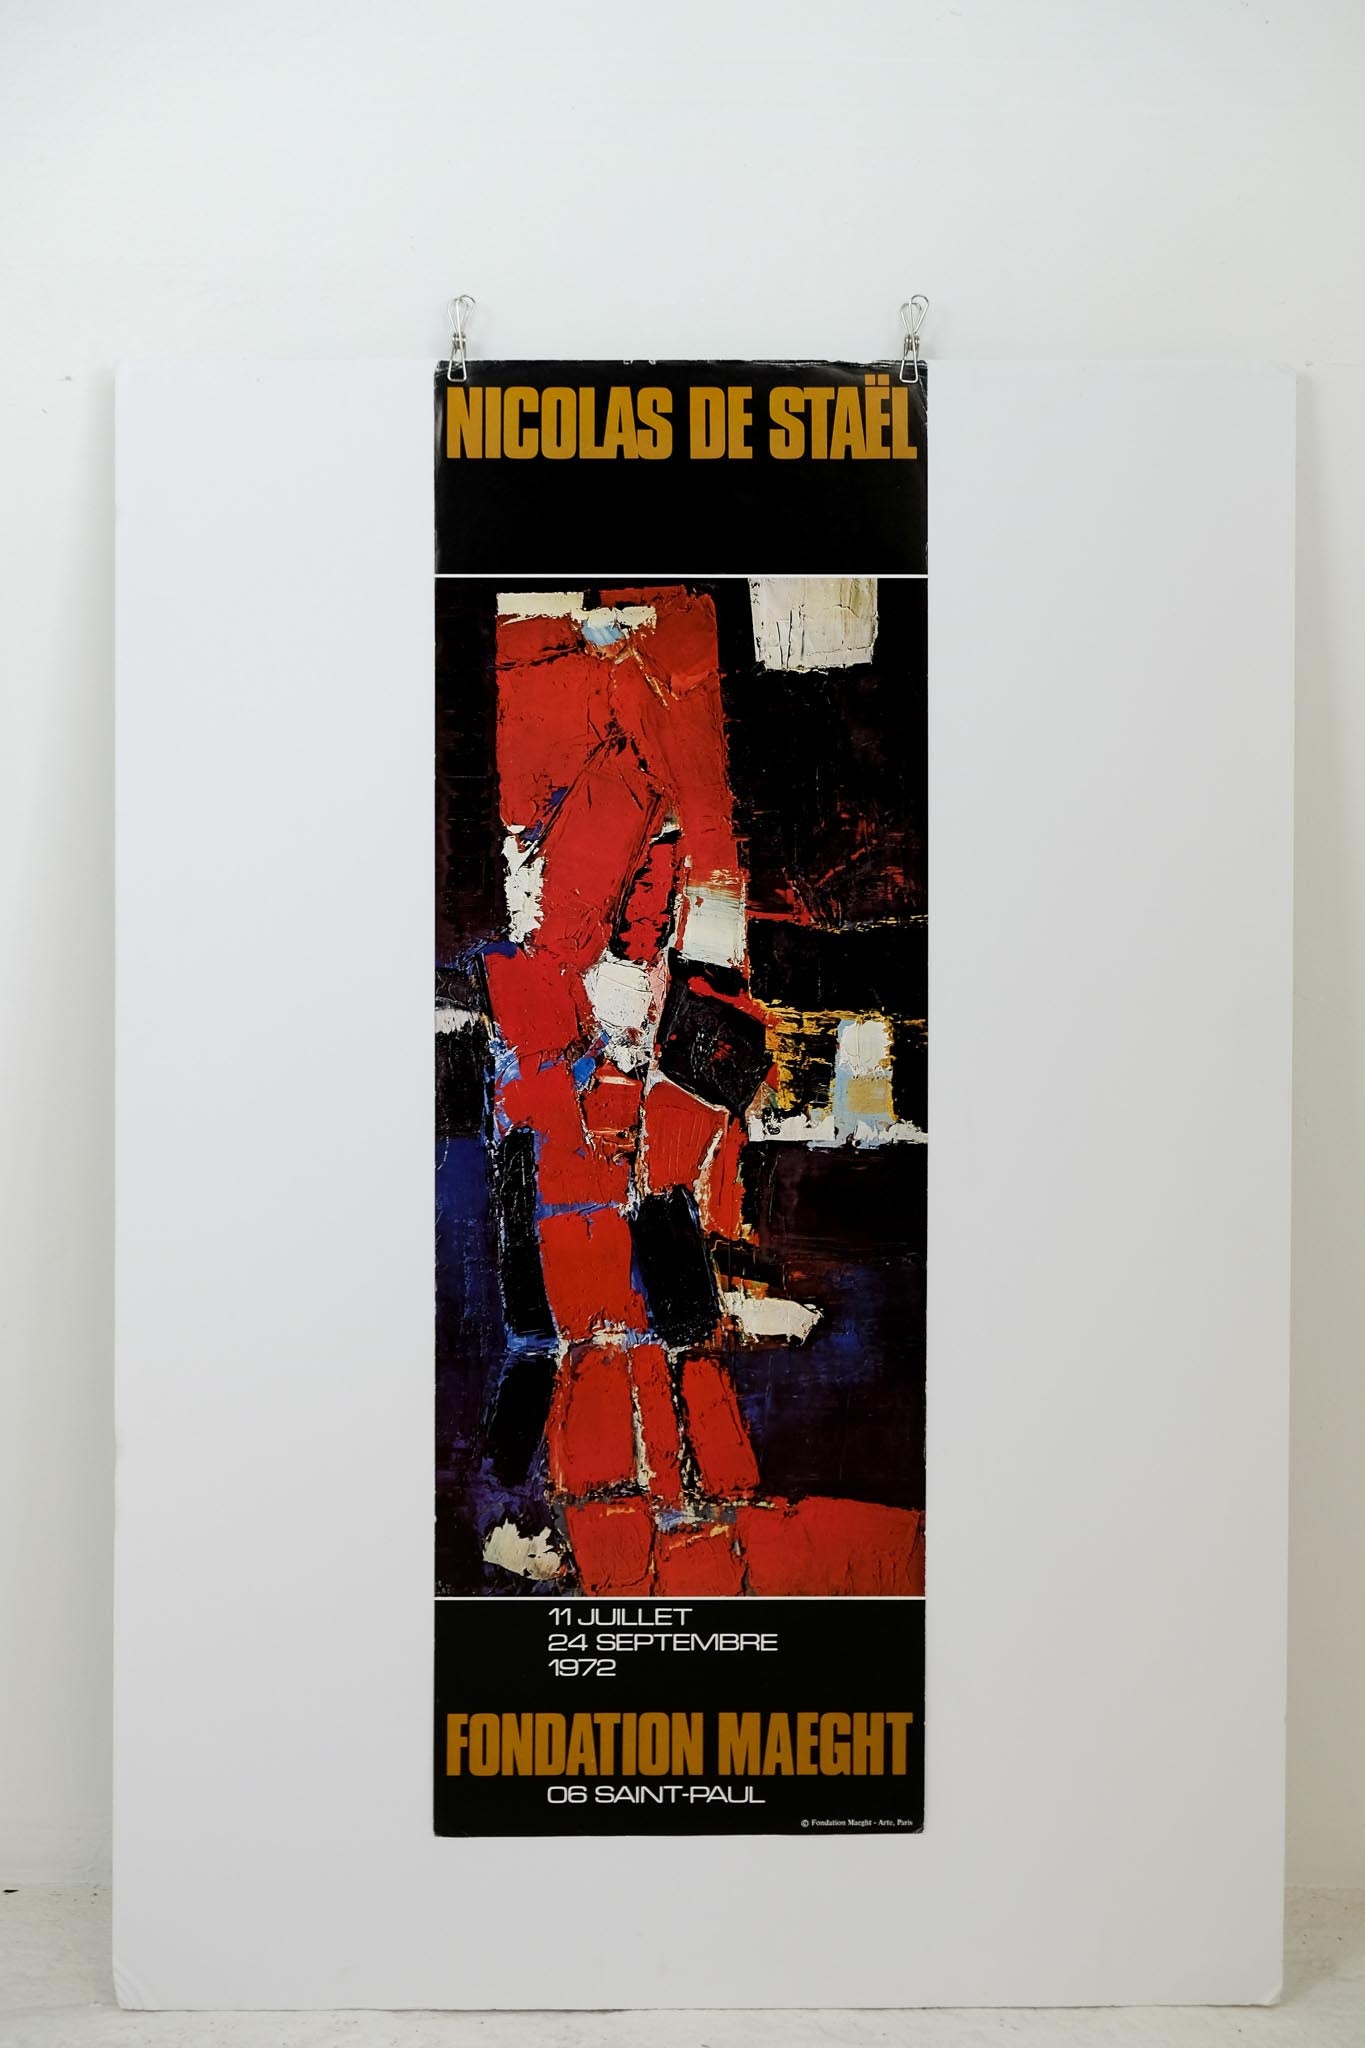 Nicholas de Stael Foundation Maeght 1972